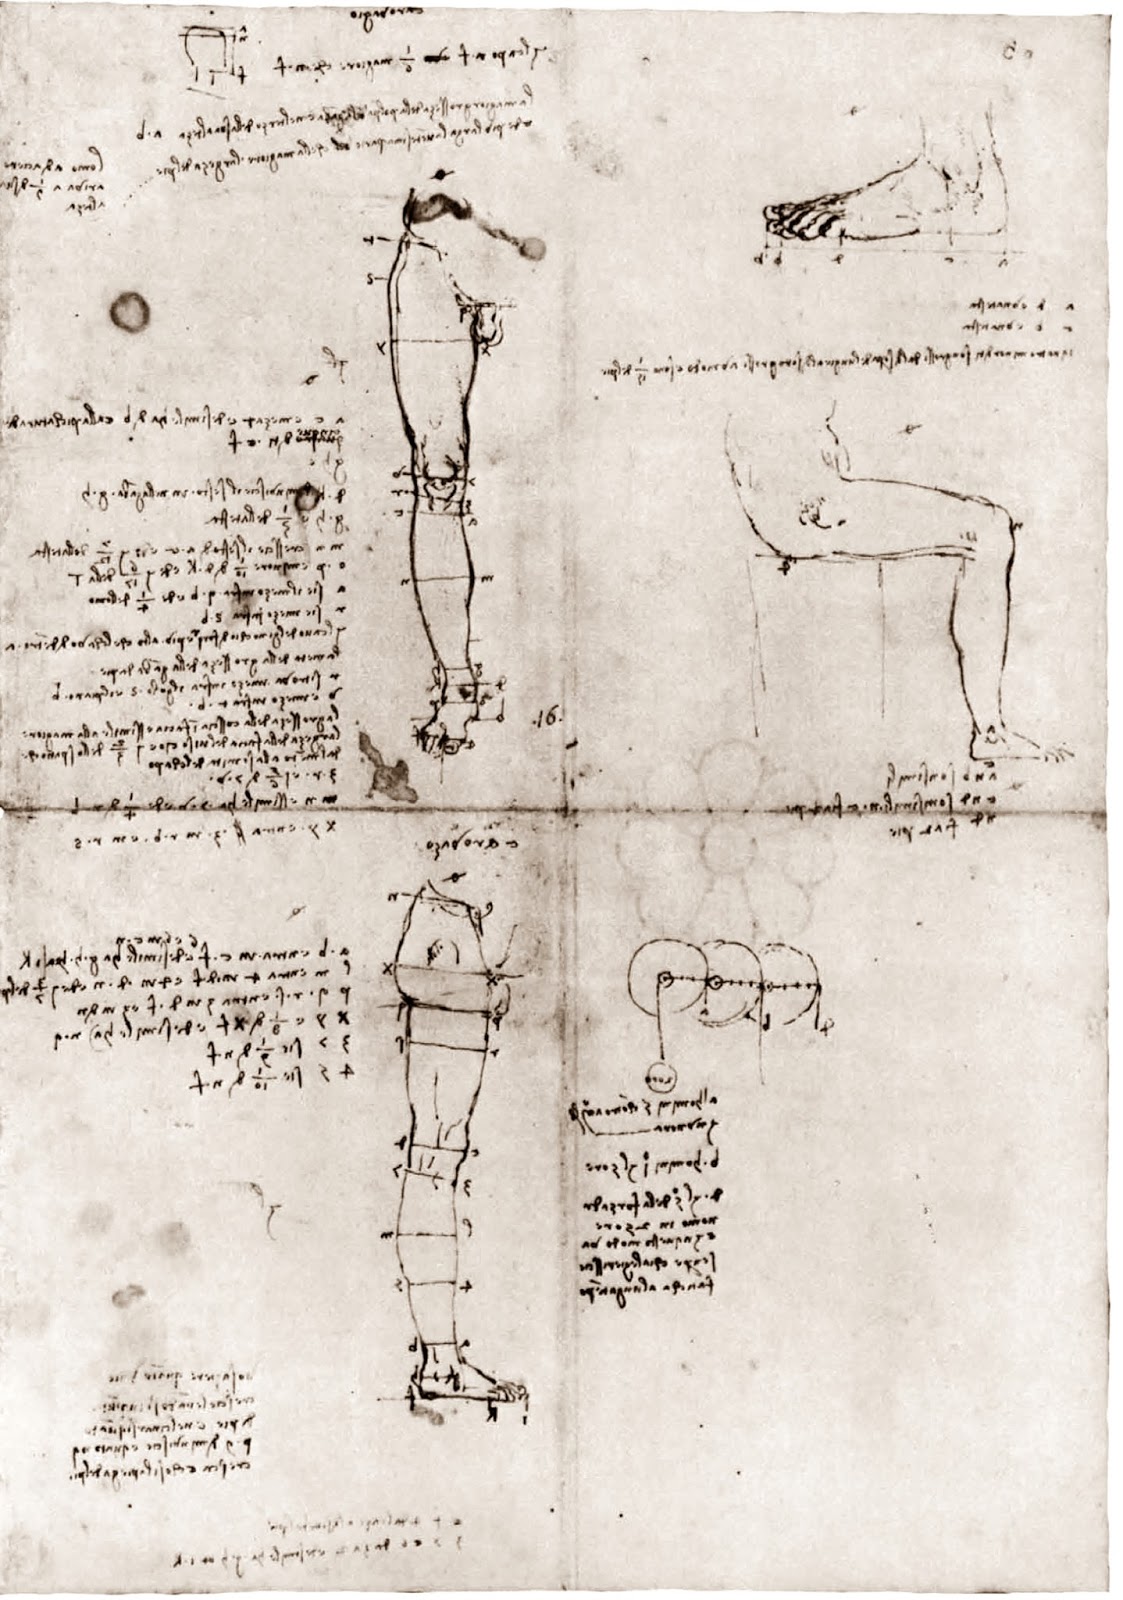 Leonardo+da+Vinci-1452-1519 (820).jpg